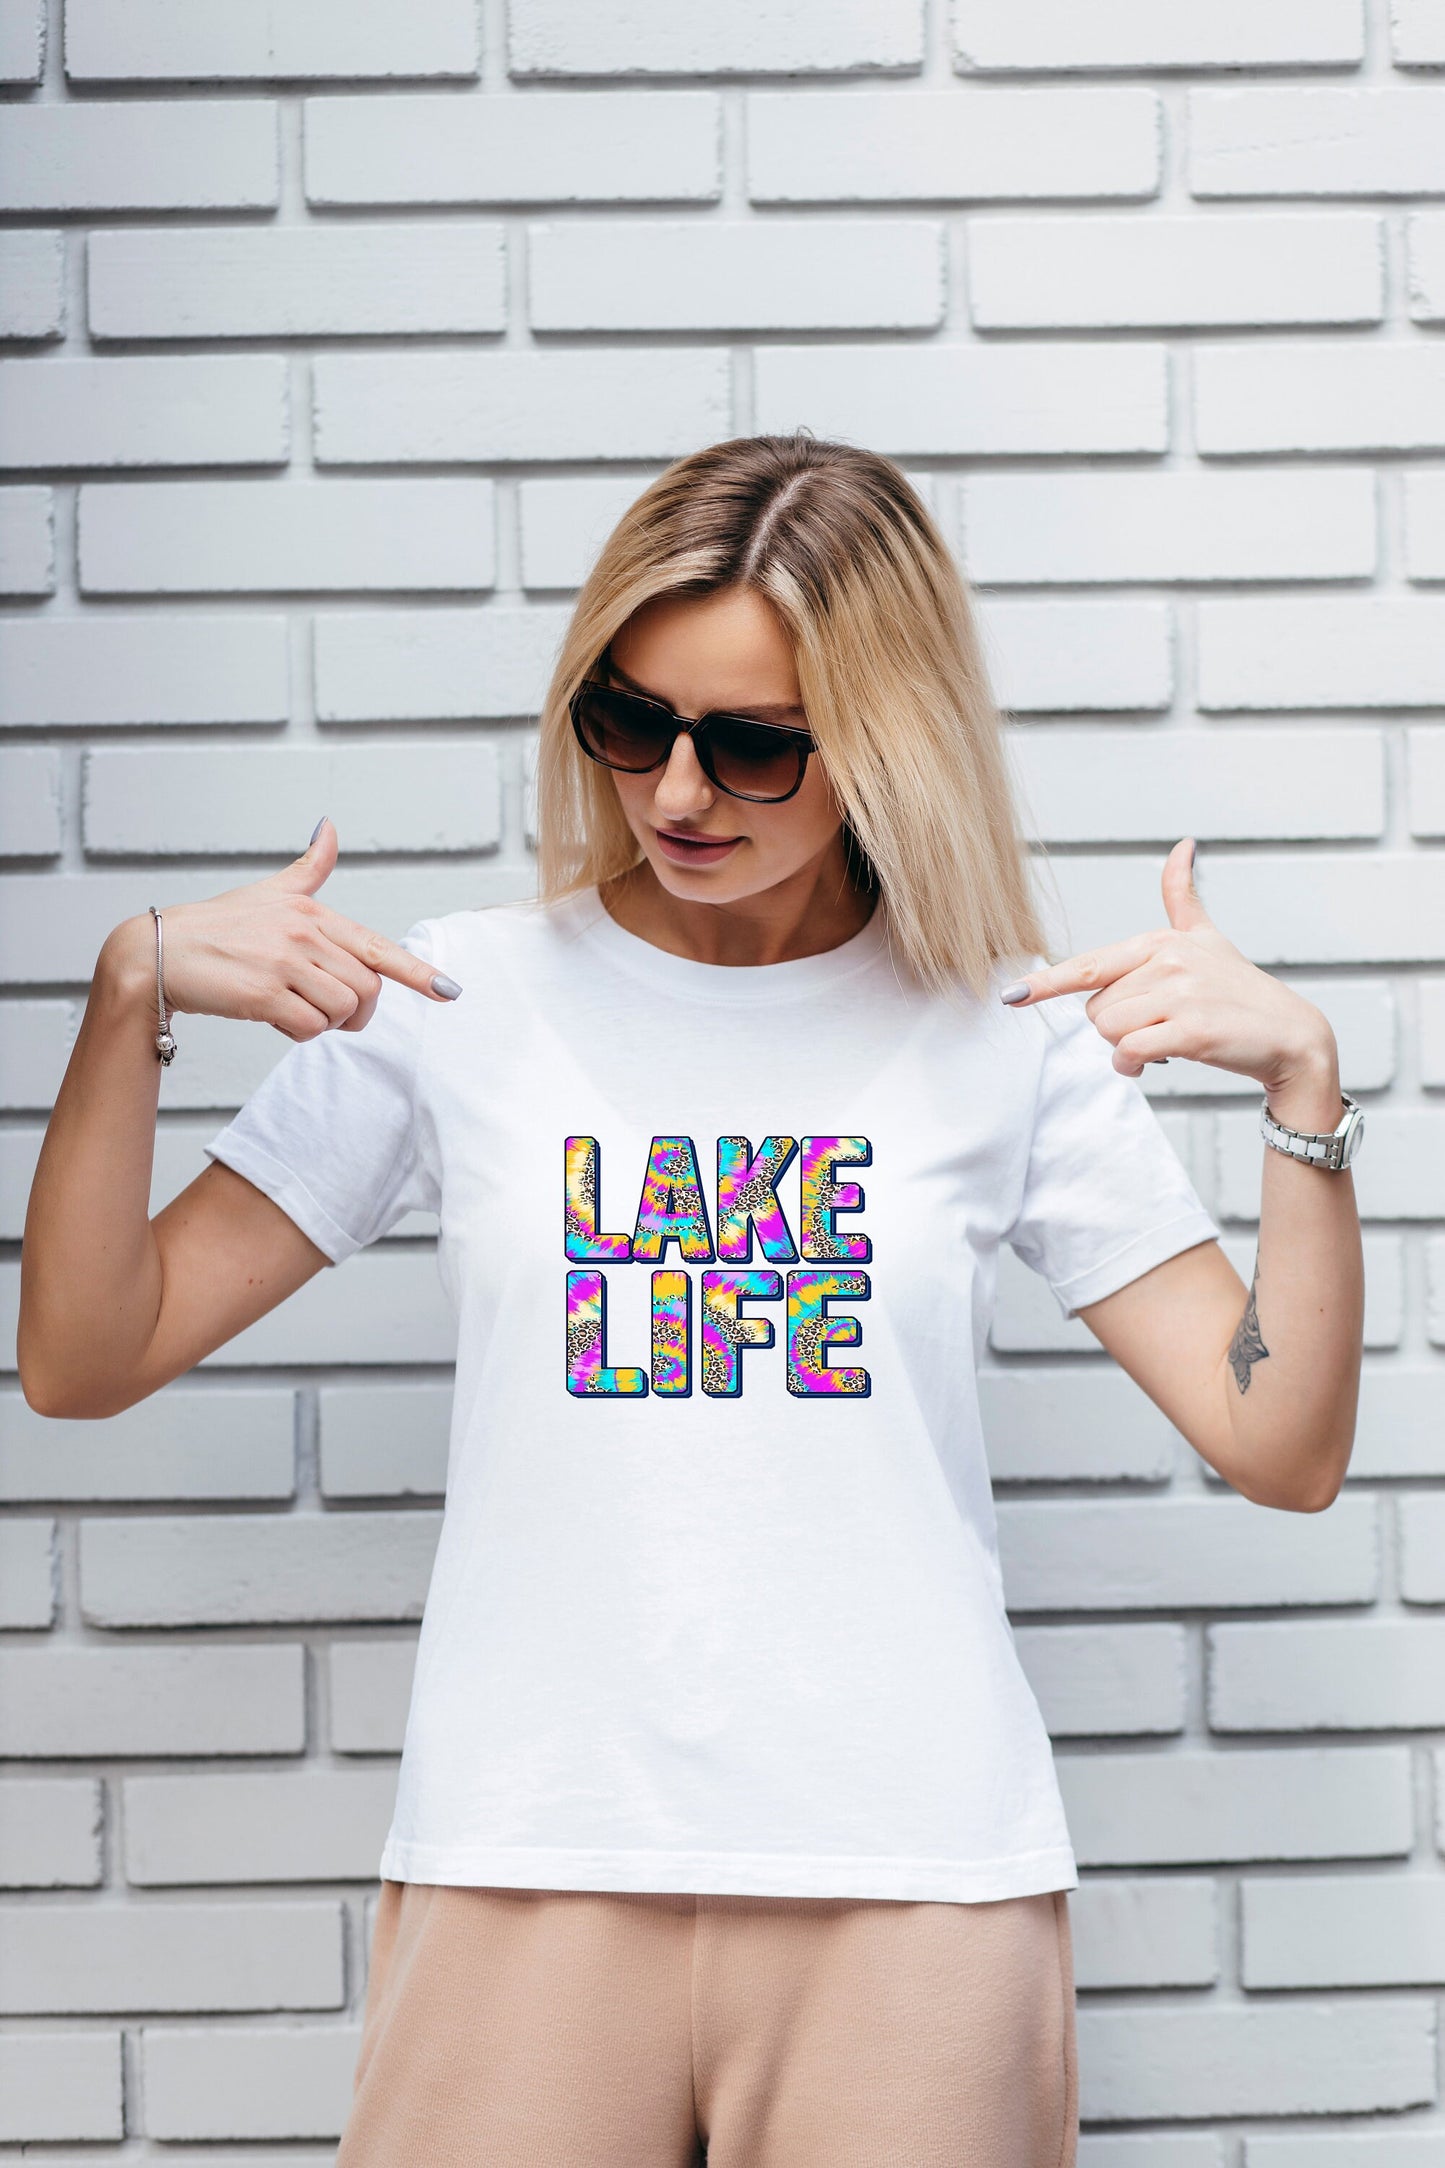 Lake Life, Summer T Shirt, Tshirt, Graphic T's  100% Cotton Black White or Gray, Tee, Motivational,